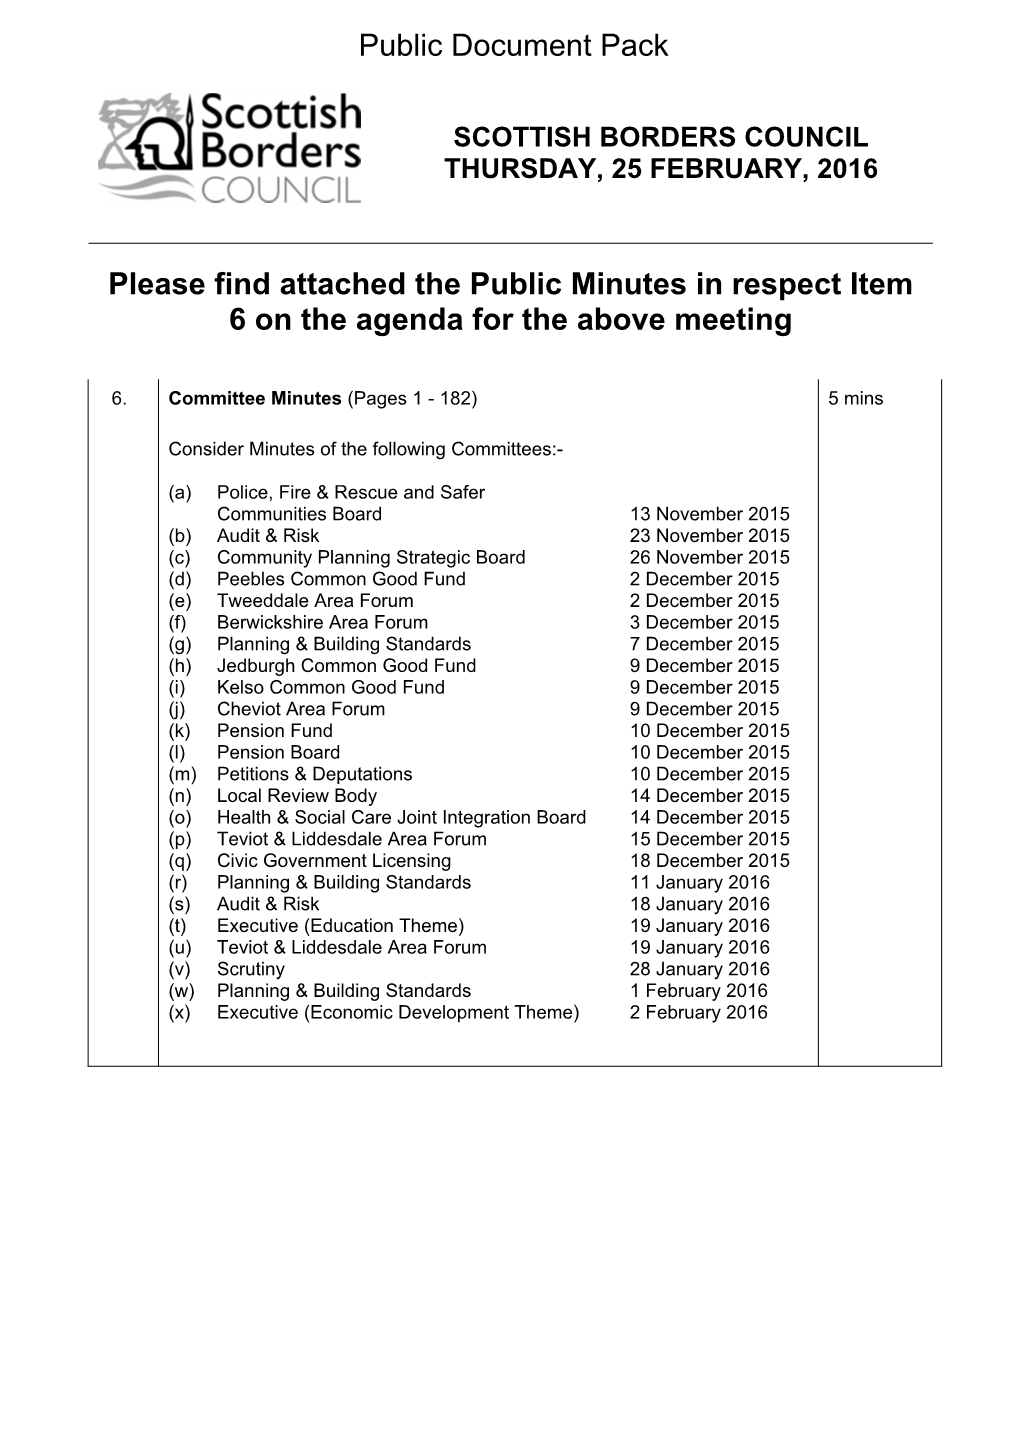 Public Minutes Agenda Supplement For